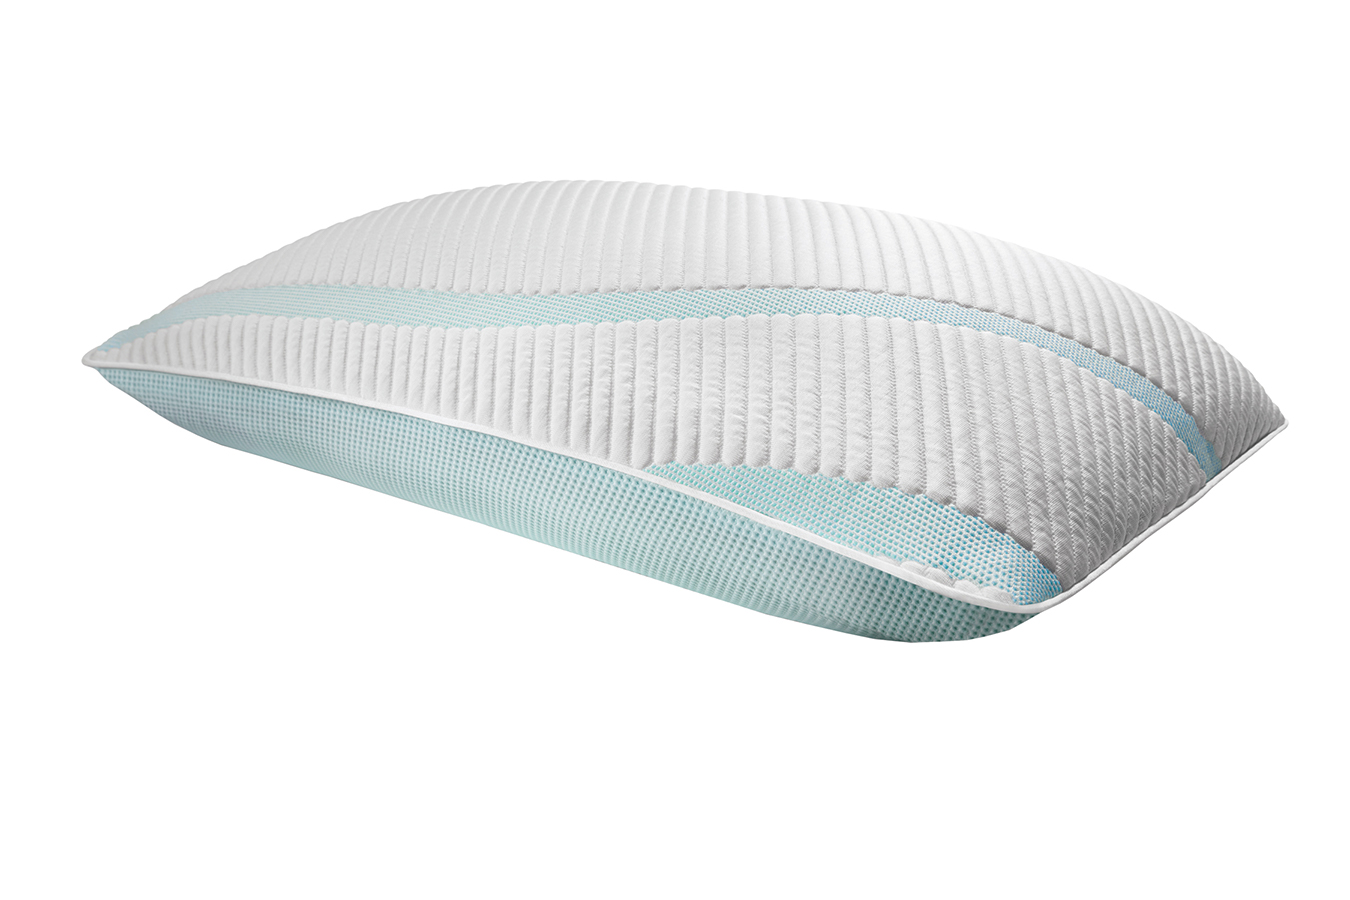 TEMPUR-Pedic ADAPT Queen ProMid+ Cooling Pillow